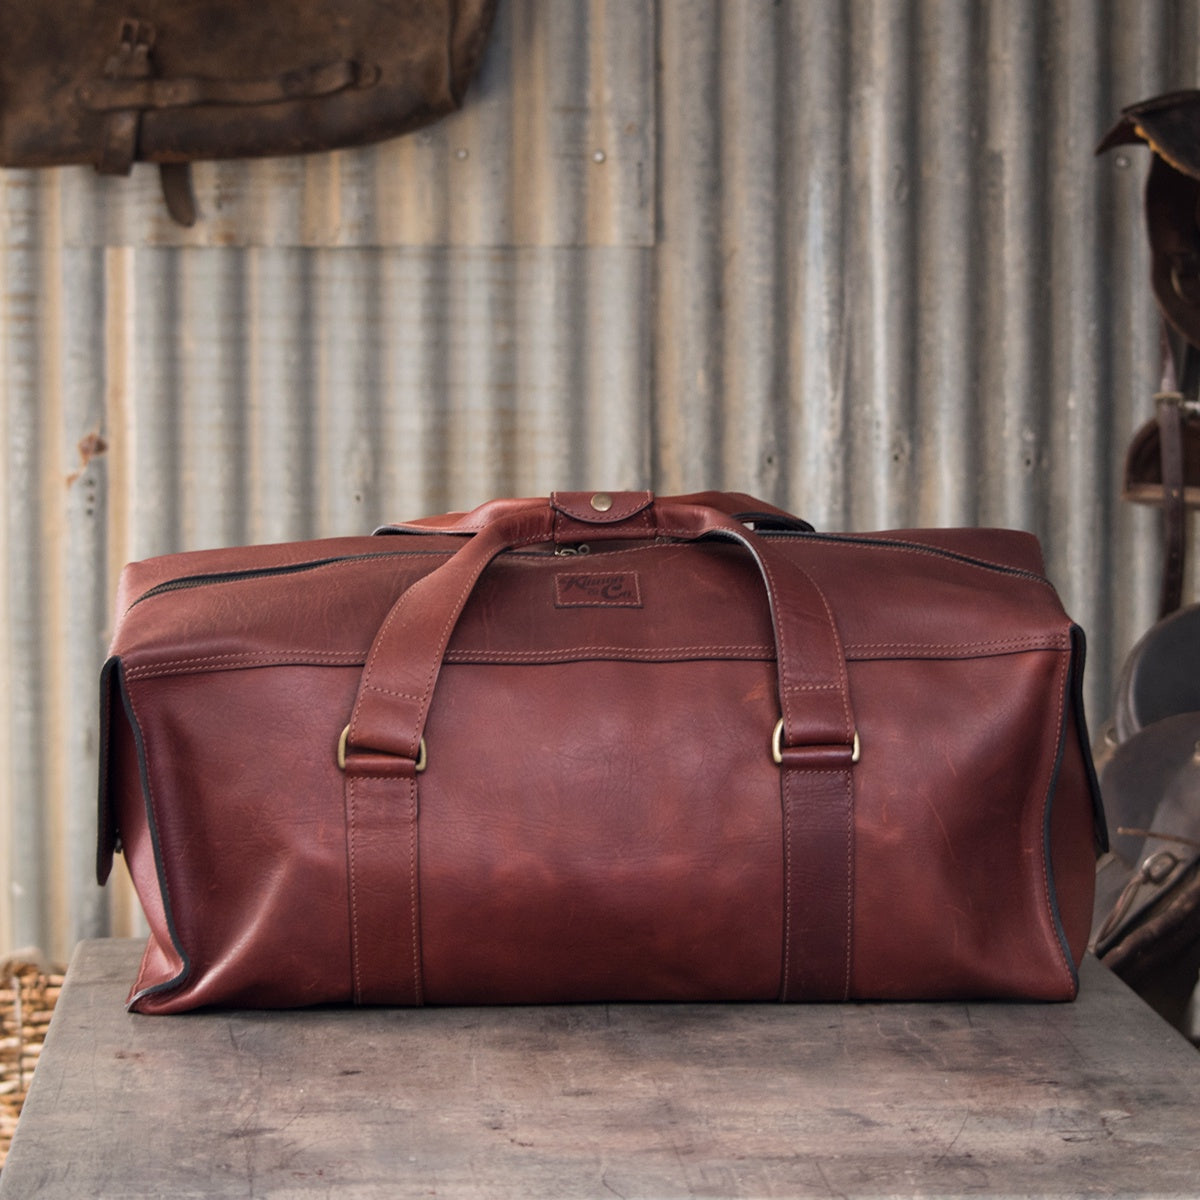 Kinnon and Co branded Leather Traveller Bag - Medium